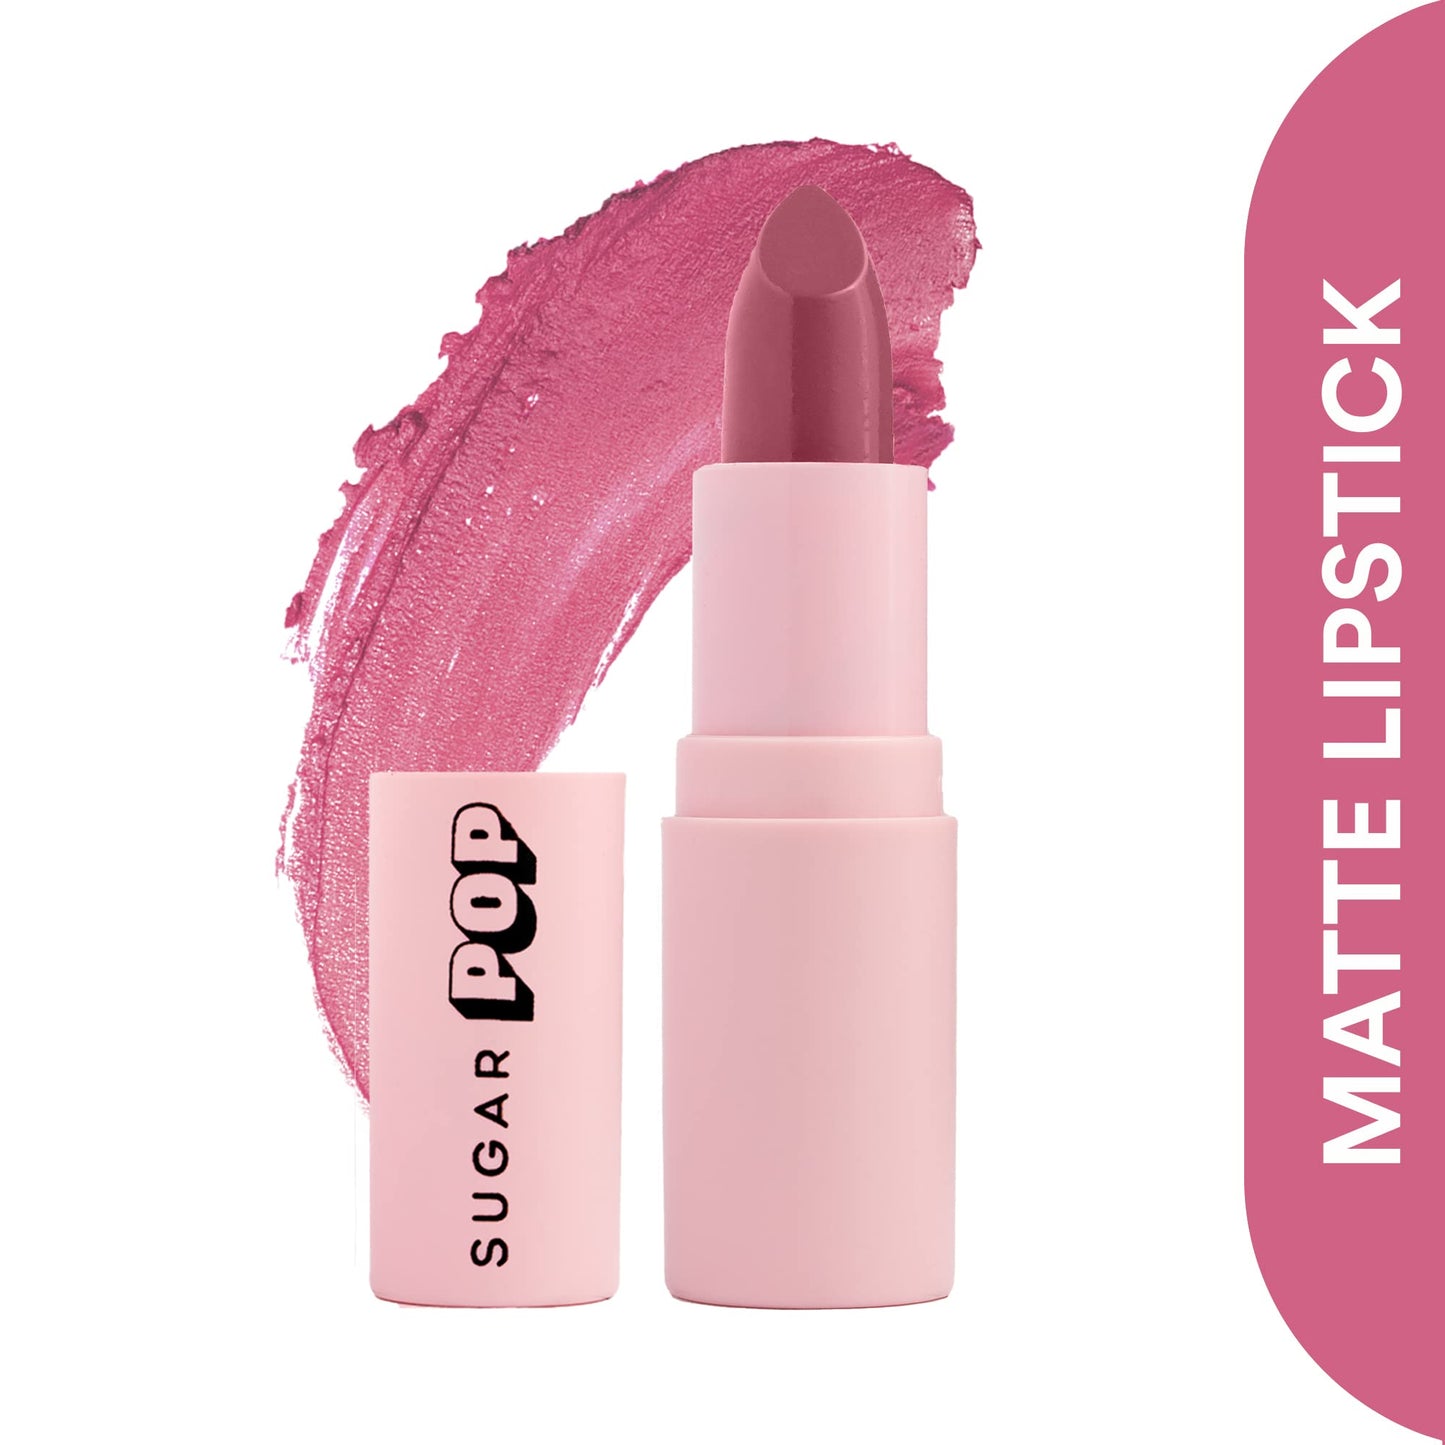 SUGAR POP Matte Lipstick - 01 Taupe (Dusty Rose) – 4.2 gm & SUGAR POP Matte Lipcolour - 02 Mauve (Dark Mauve) – 1.6 ml